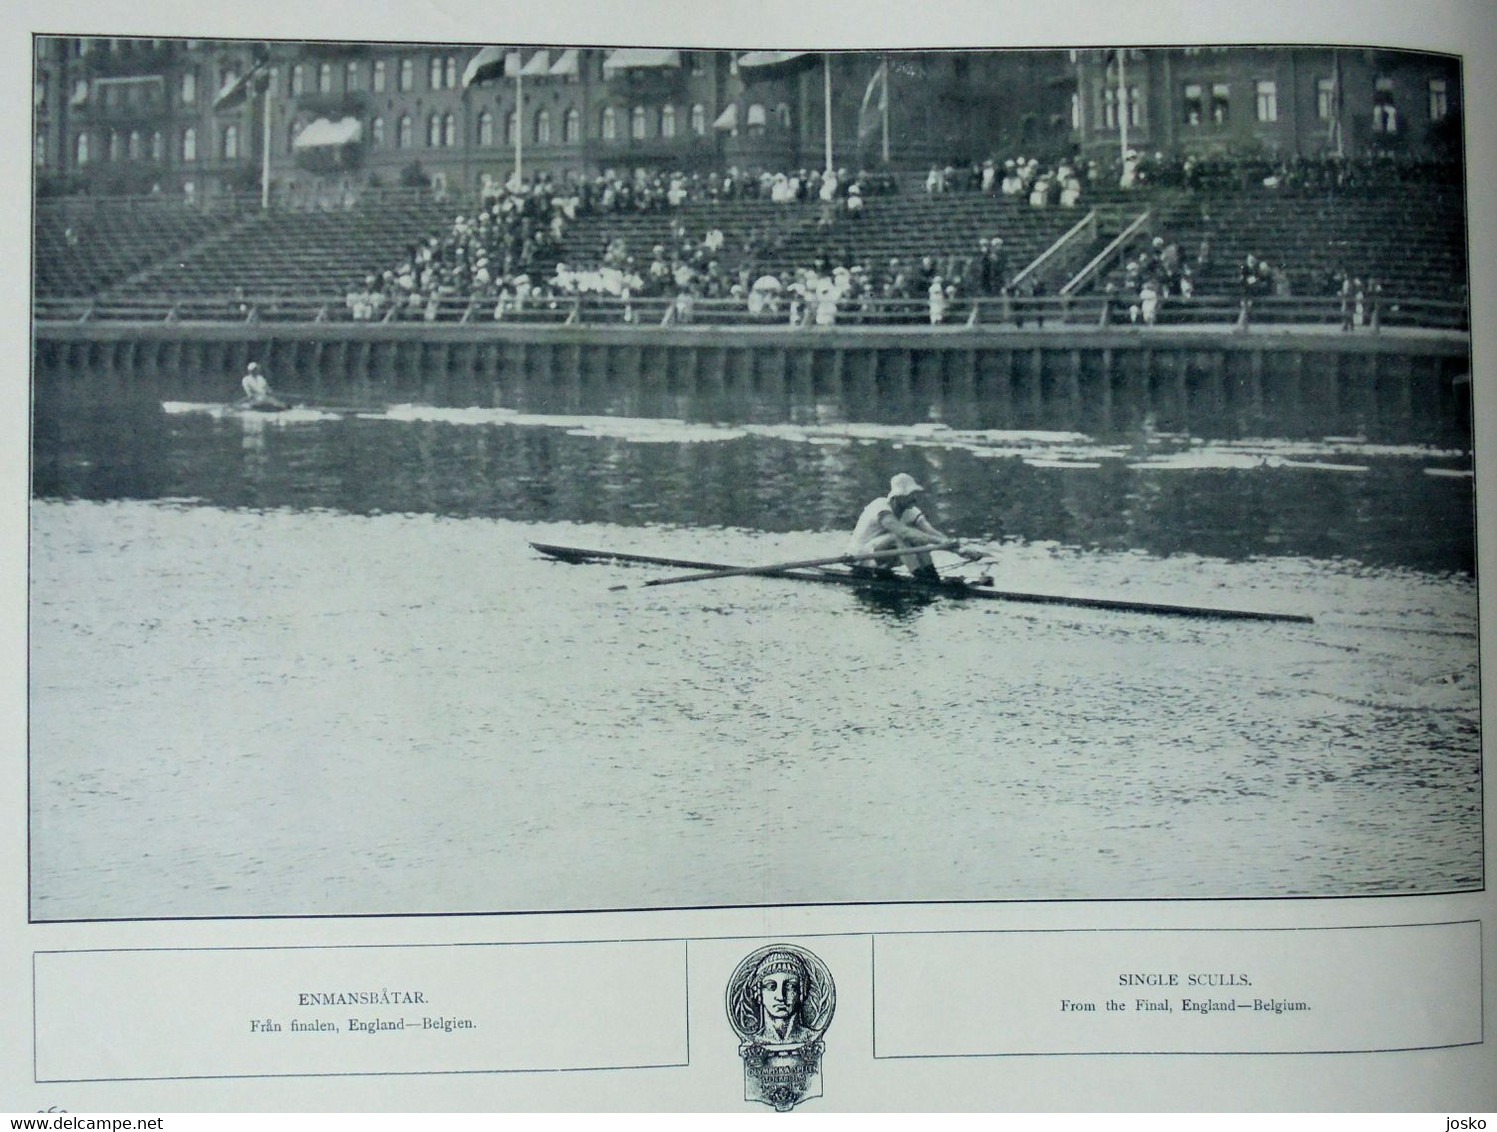 OLYMPIC GAMES STOCKHOLM 1912 * ROWING * old programme * aviron rudersport rudern rudernd ruder remo remare canottaggio